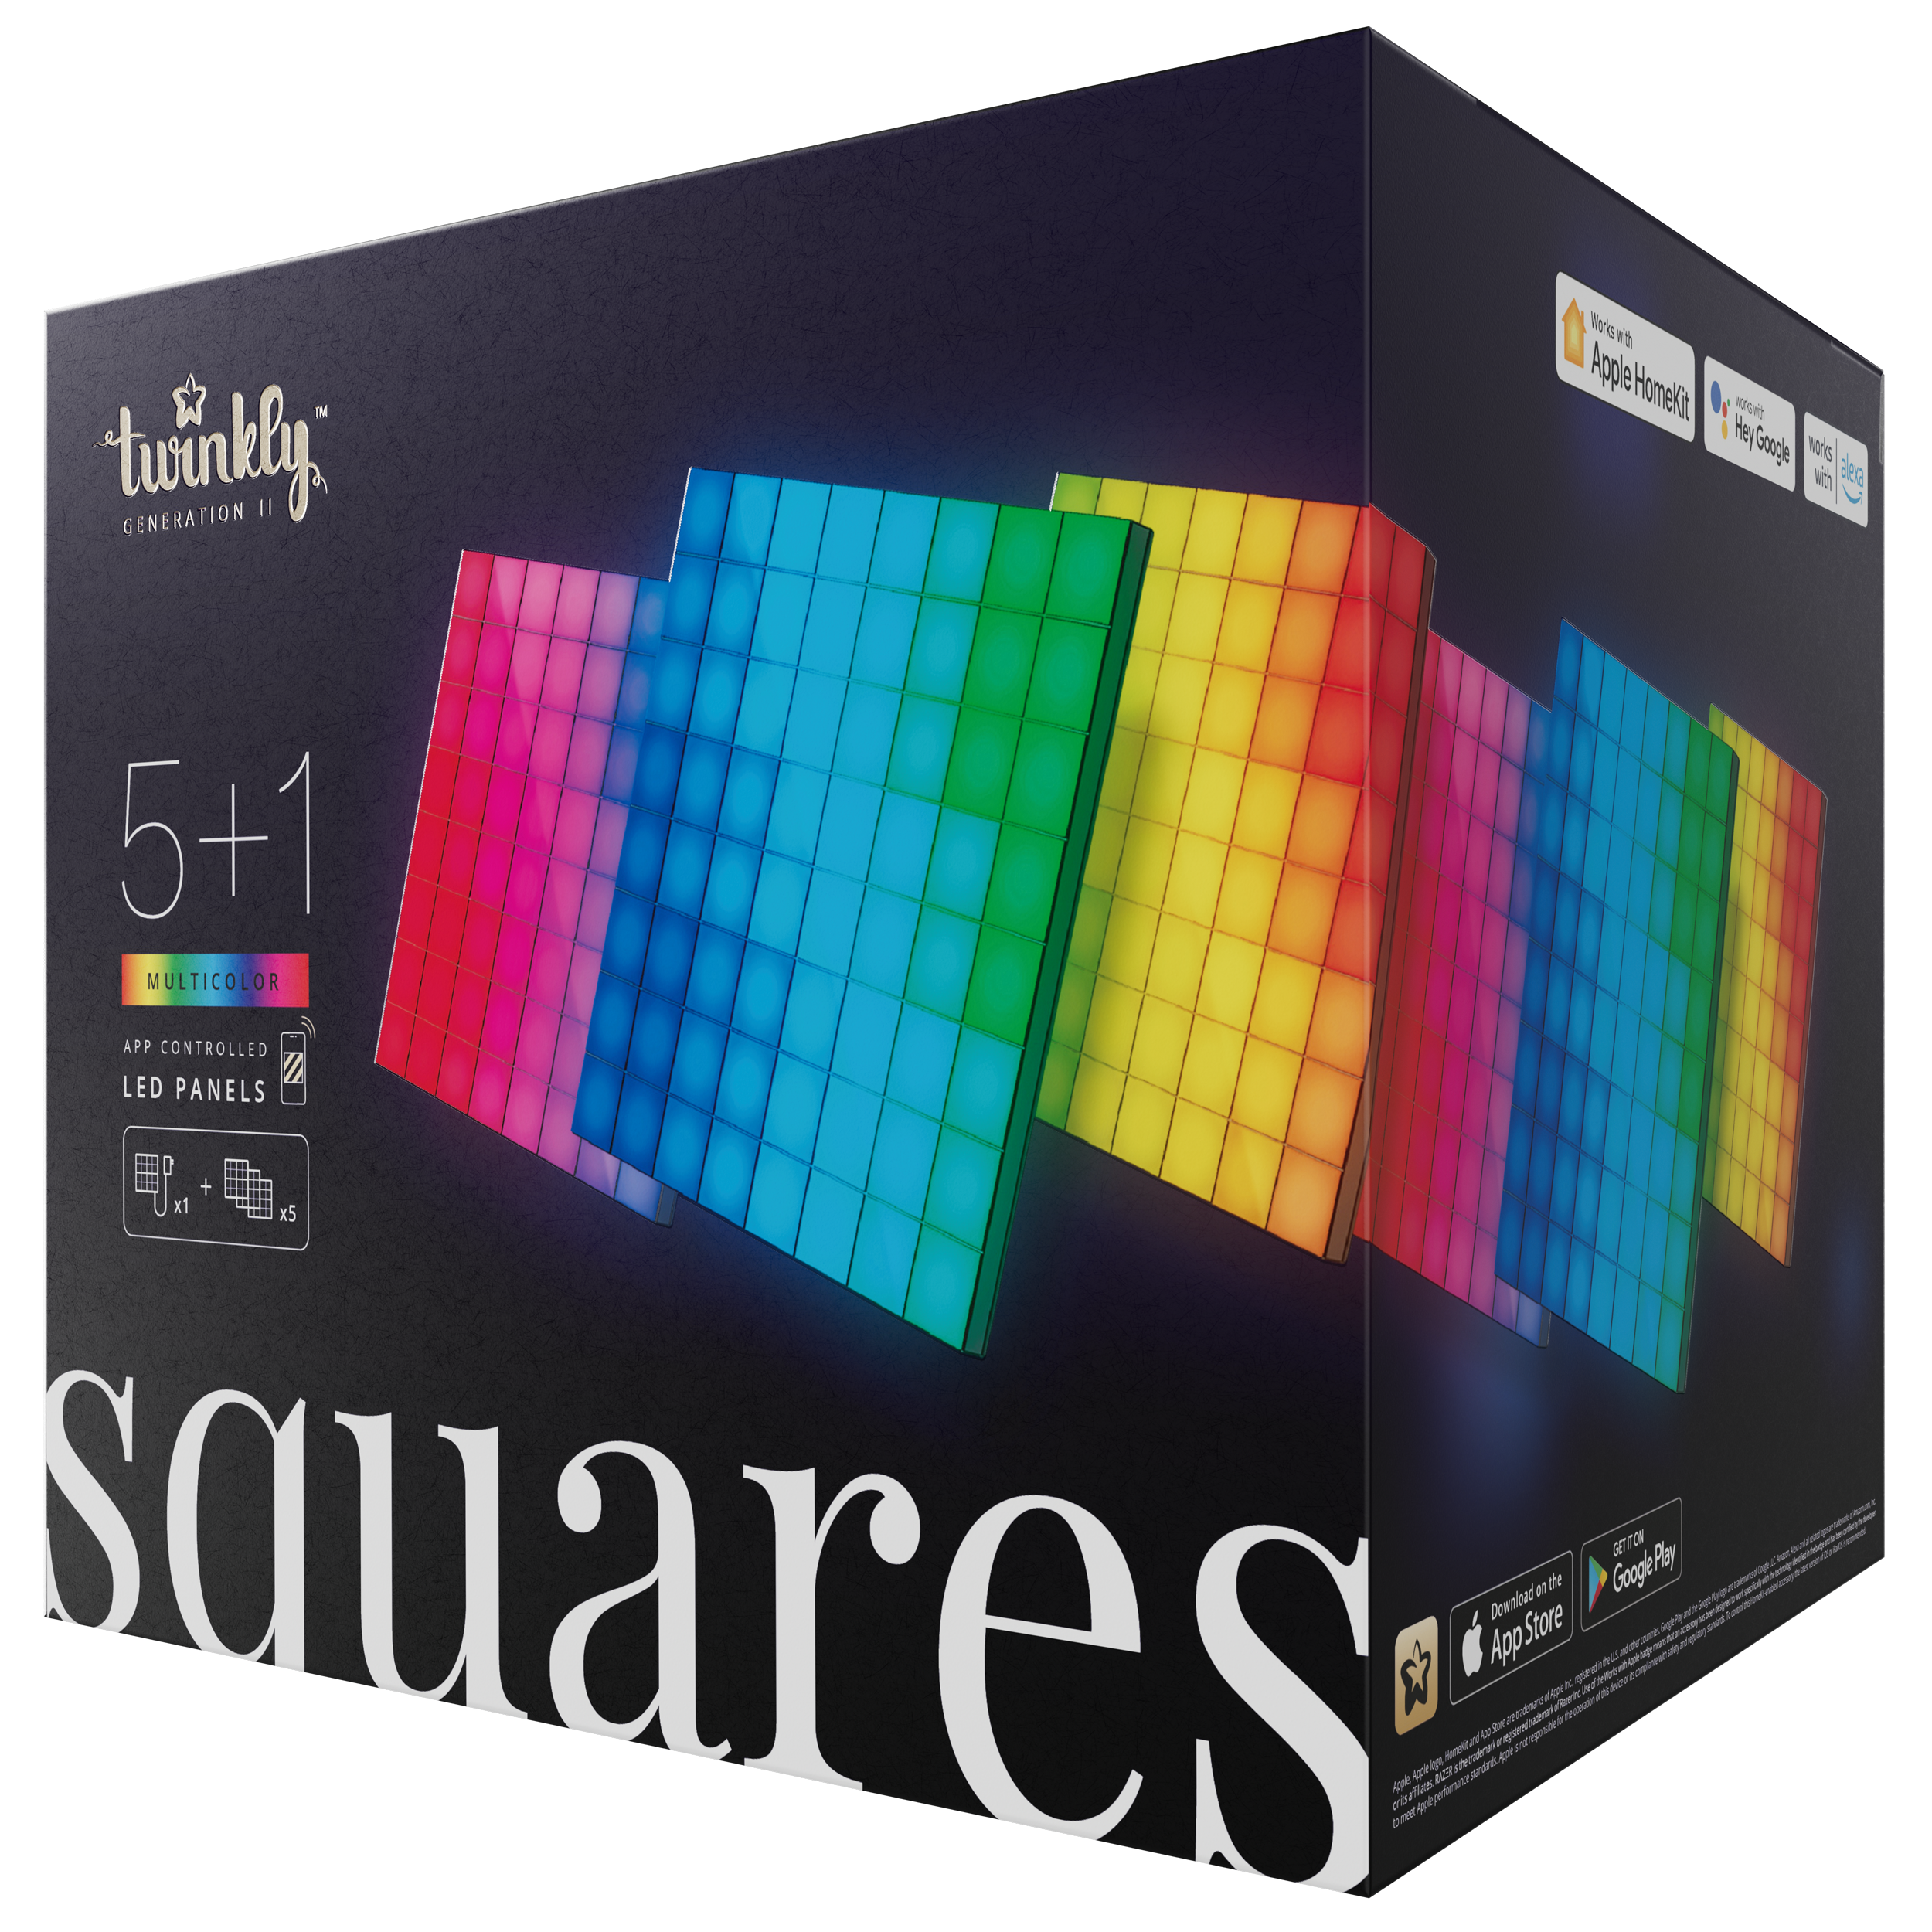 Squares (Multicolor edition)